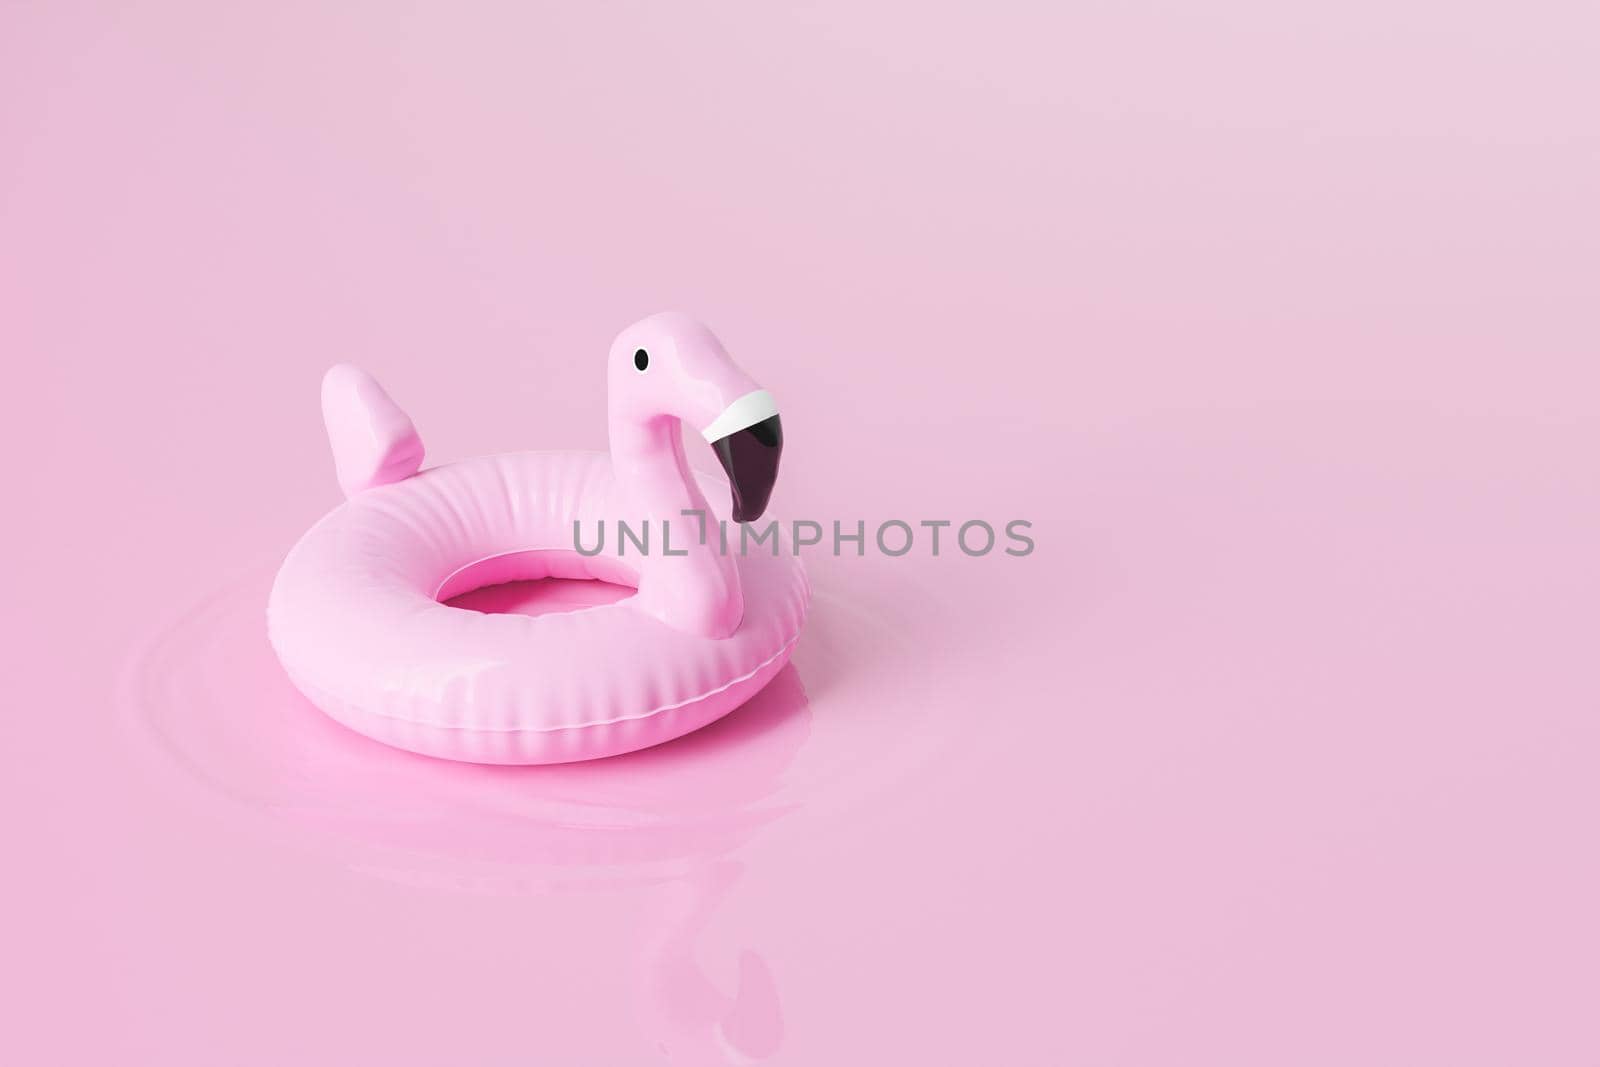 3D illustration of inflatable flamingo shaped tube floating on surface of reflecting pink liquid